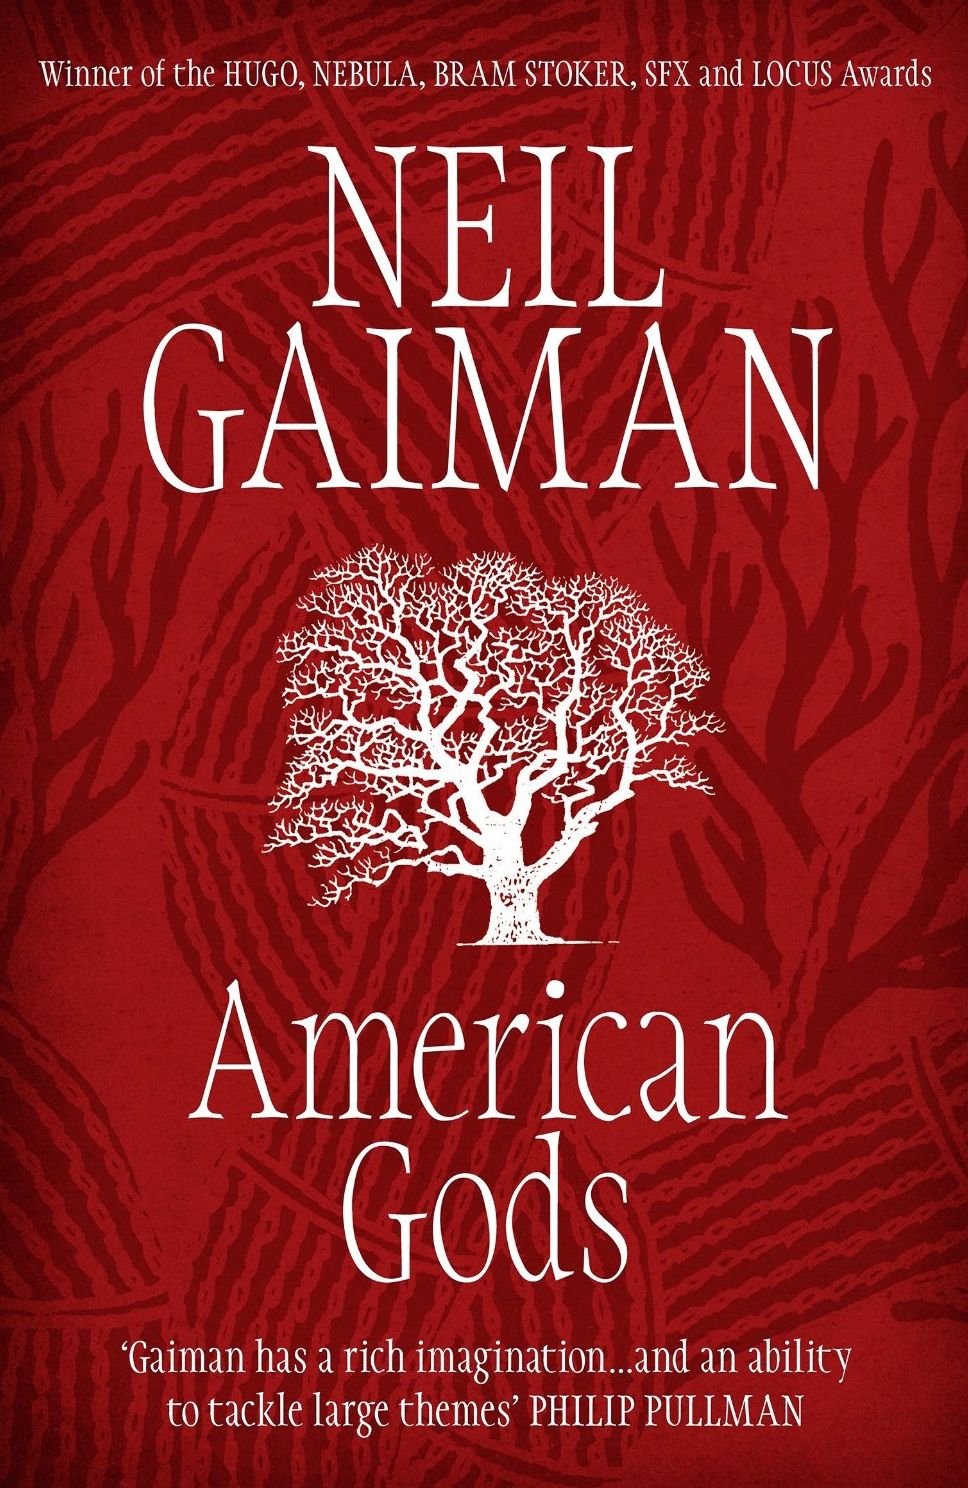 American Gods by Neil Gaiman, in development for Starz TV se